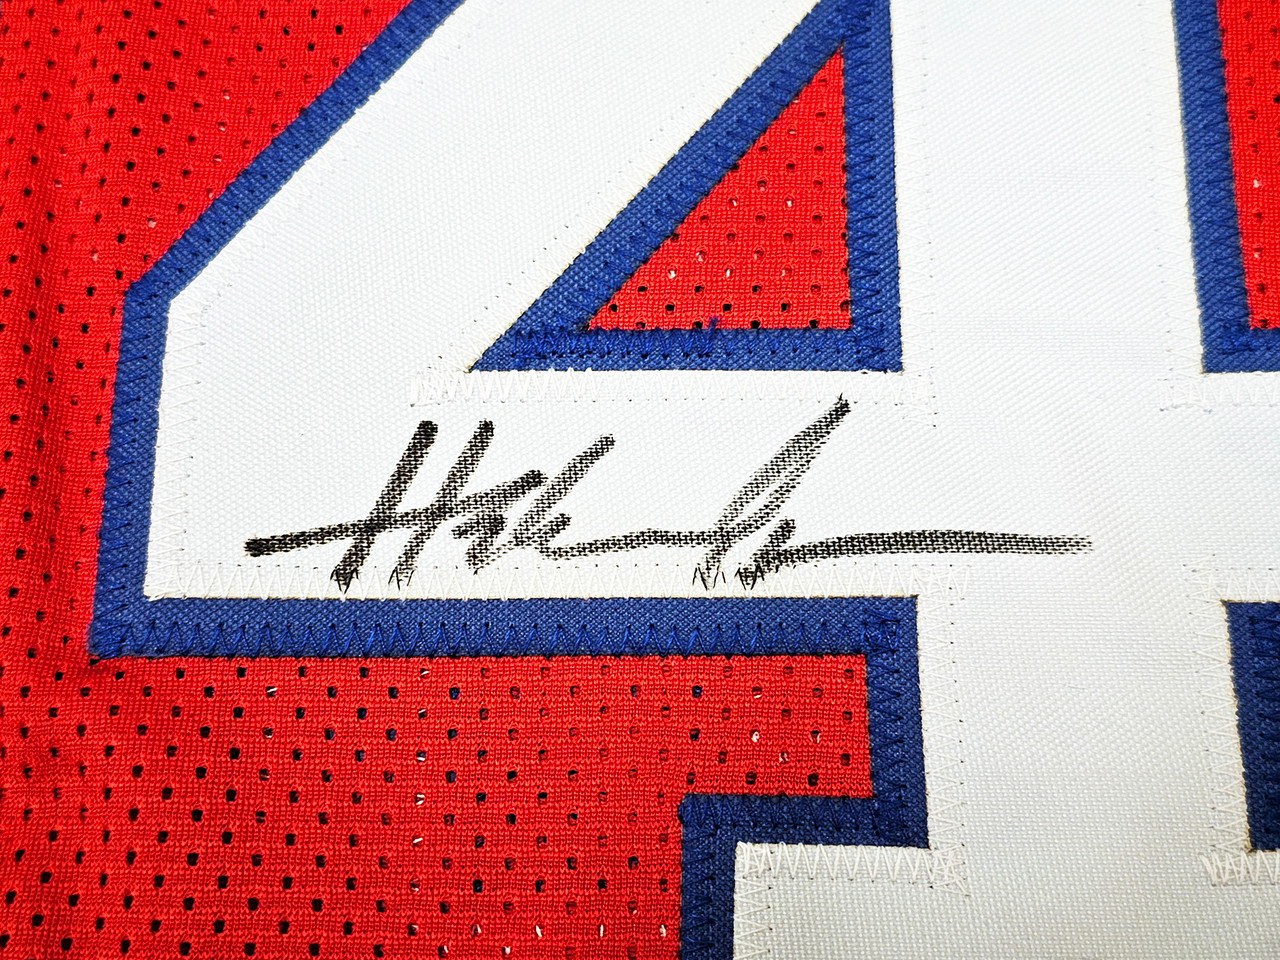 Houston Rockets Hakeem Olajuwon Autographed Framed Red Jersey JSA Stock  #209446 - Mill Creek Sports